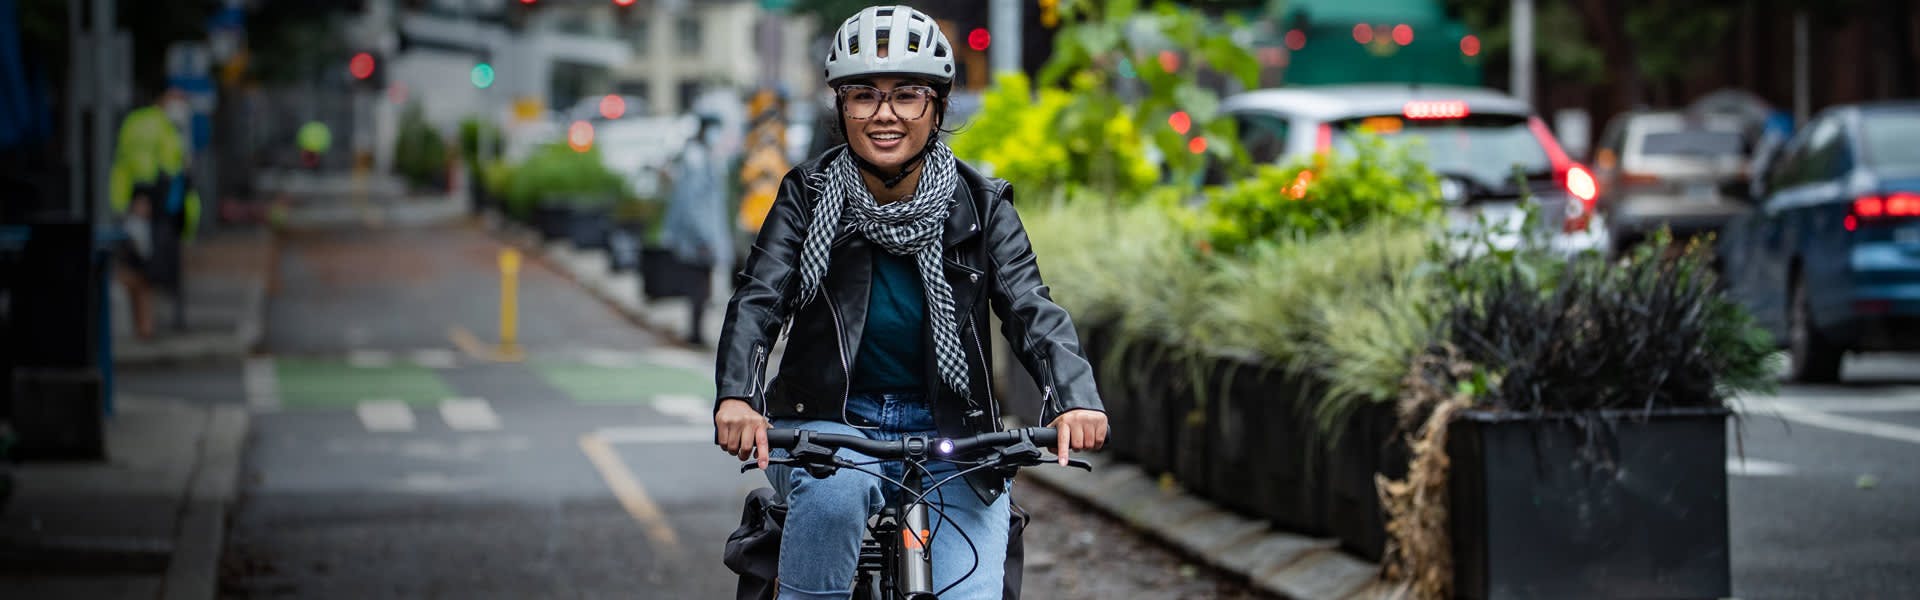 A young woman riding a bike through a city